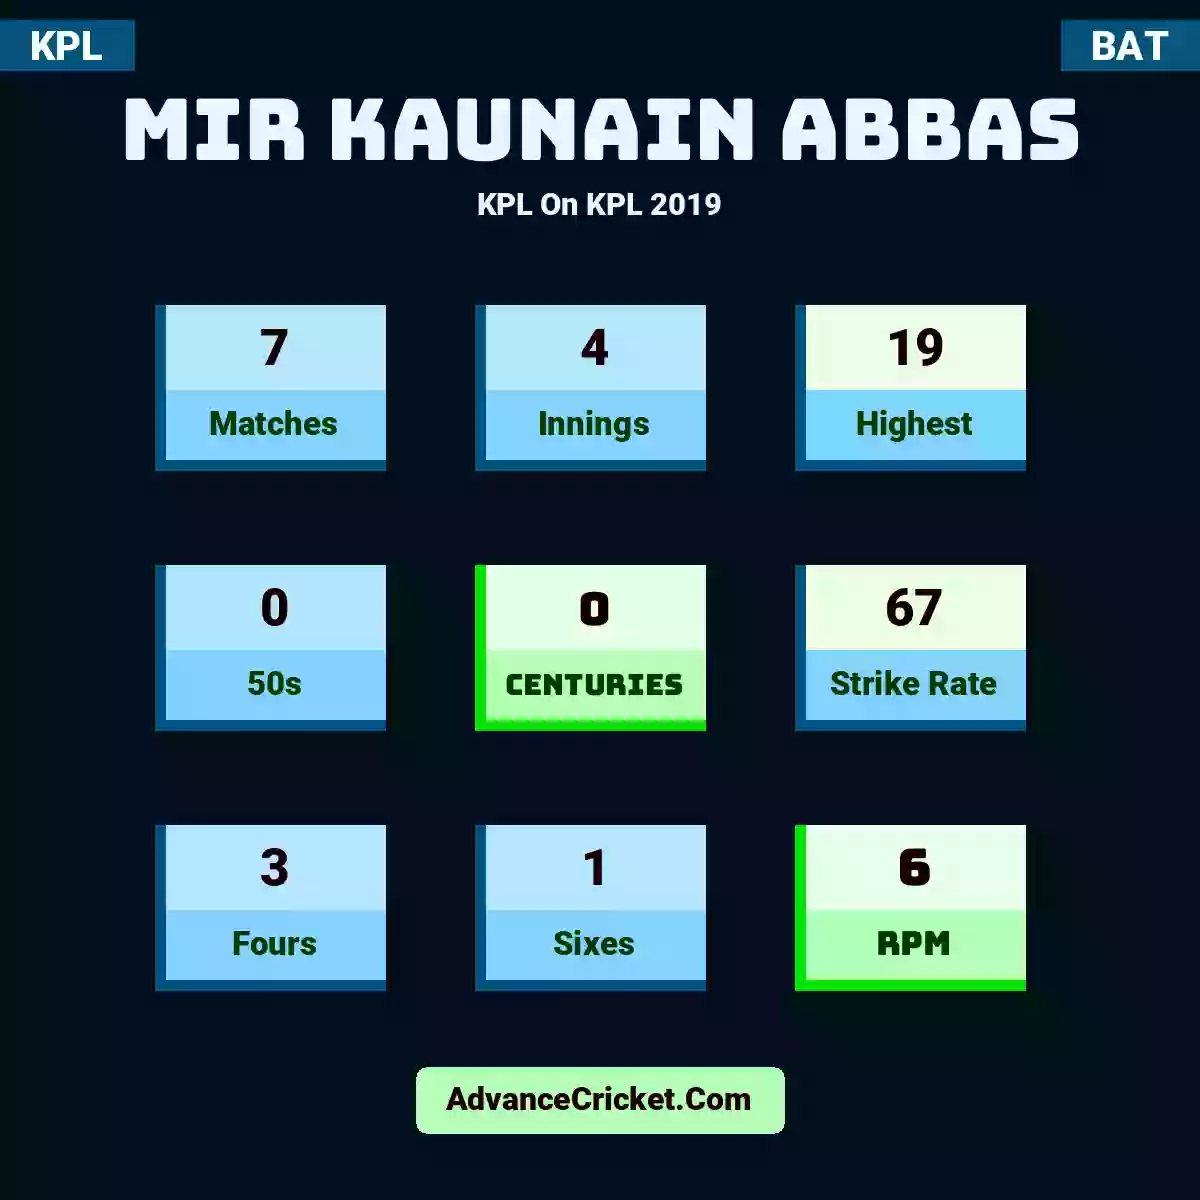 Mir Kaunain Abbas KPL  On KPL 2019, Mir Kaunain Abbas played 7 matches, scored 19 runs as highest, 0 half-centuries, and 0 centuries, with a strike rate of 67. M.Abbas hit 3 fours and 1 sixes, with an RPM of 6.